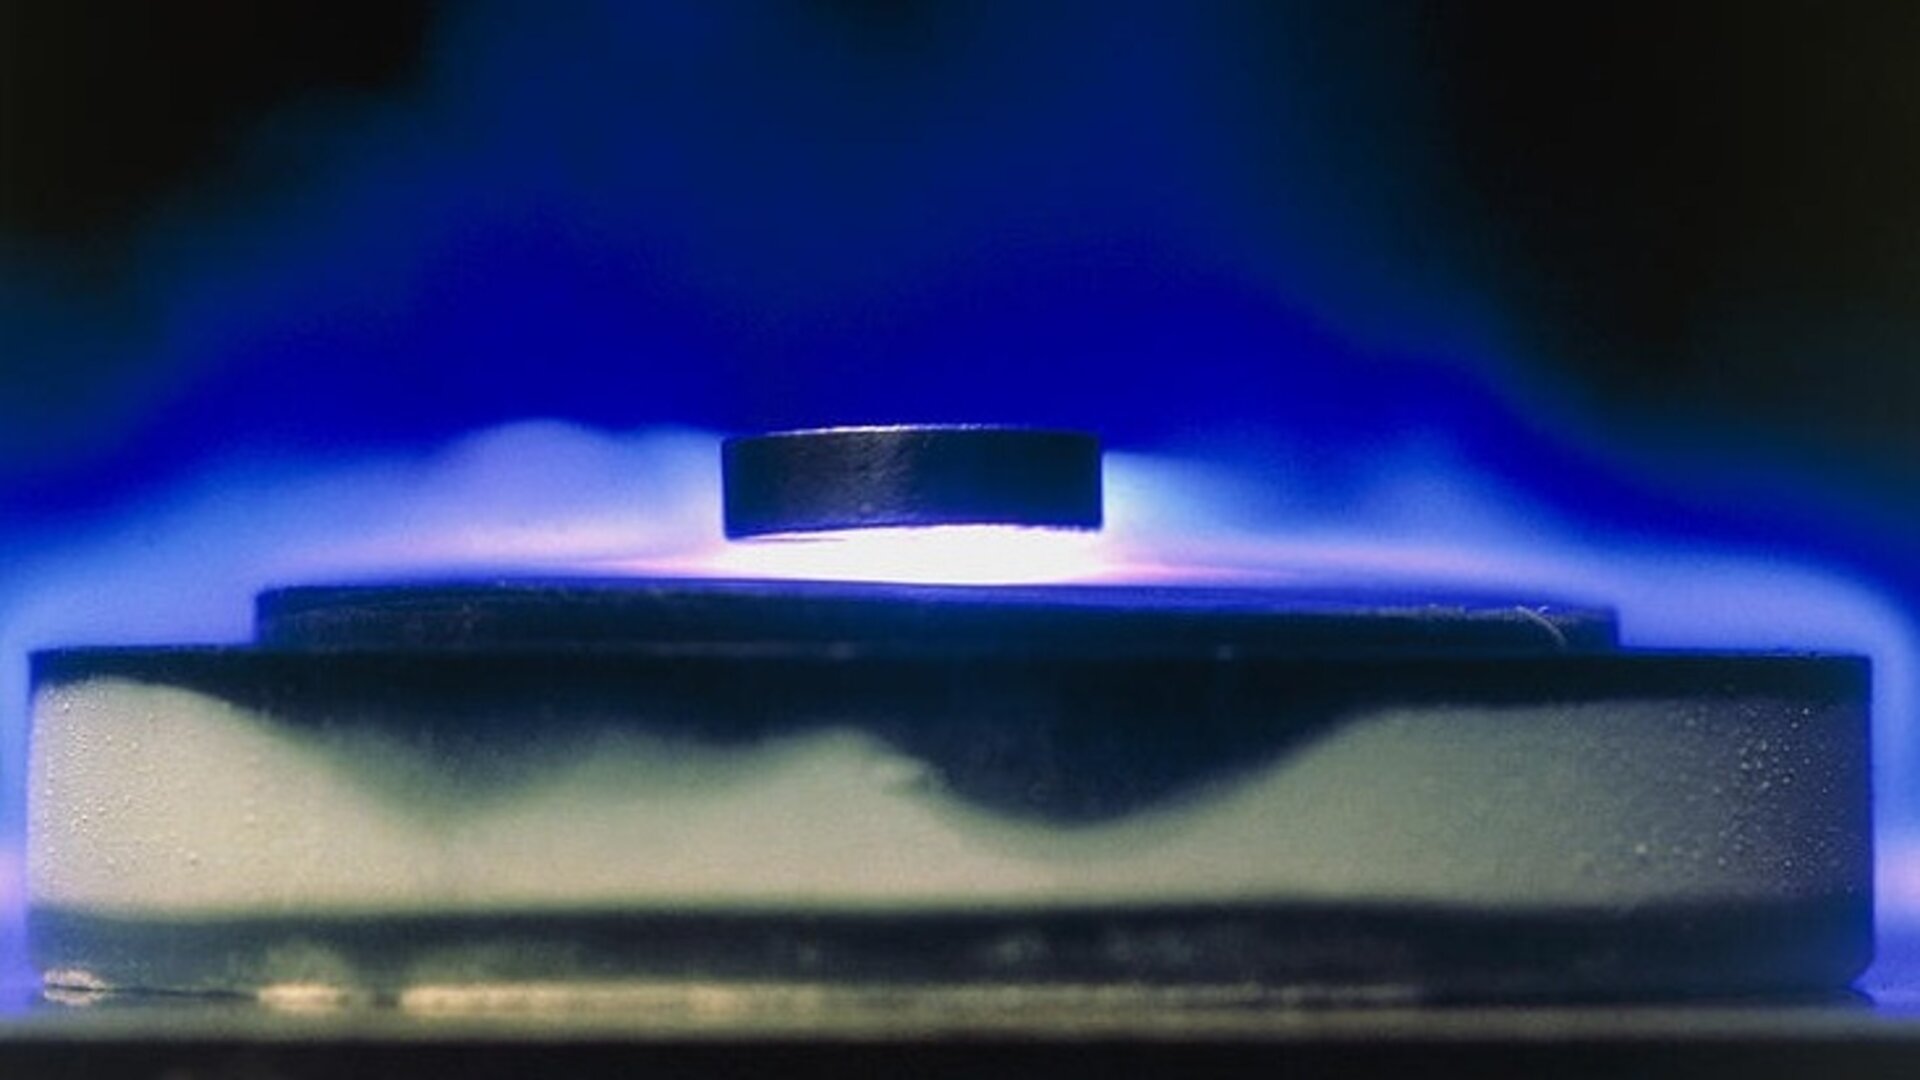 Superconductor-based magnetic levitation